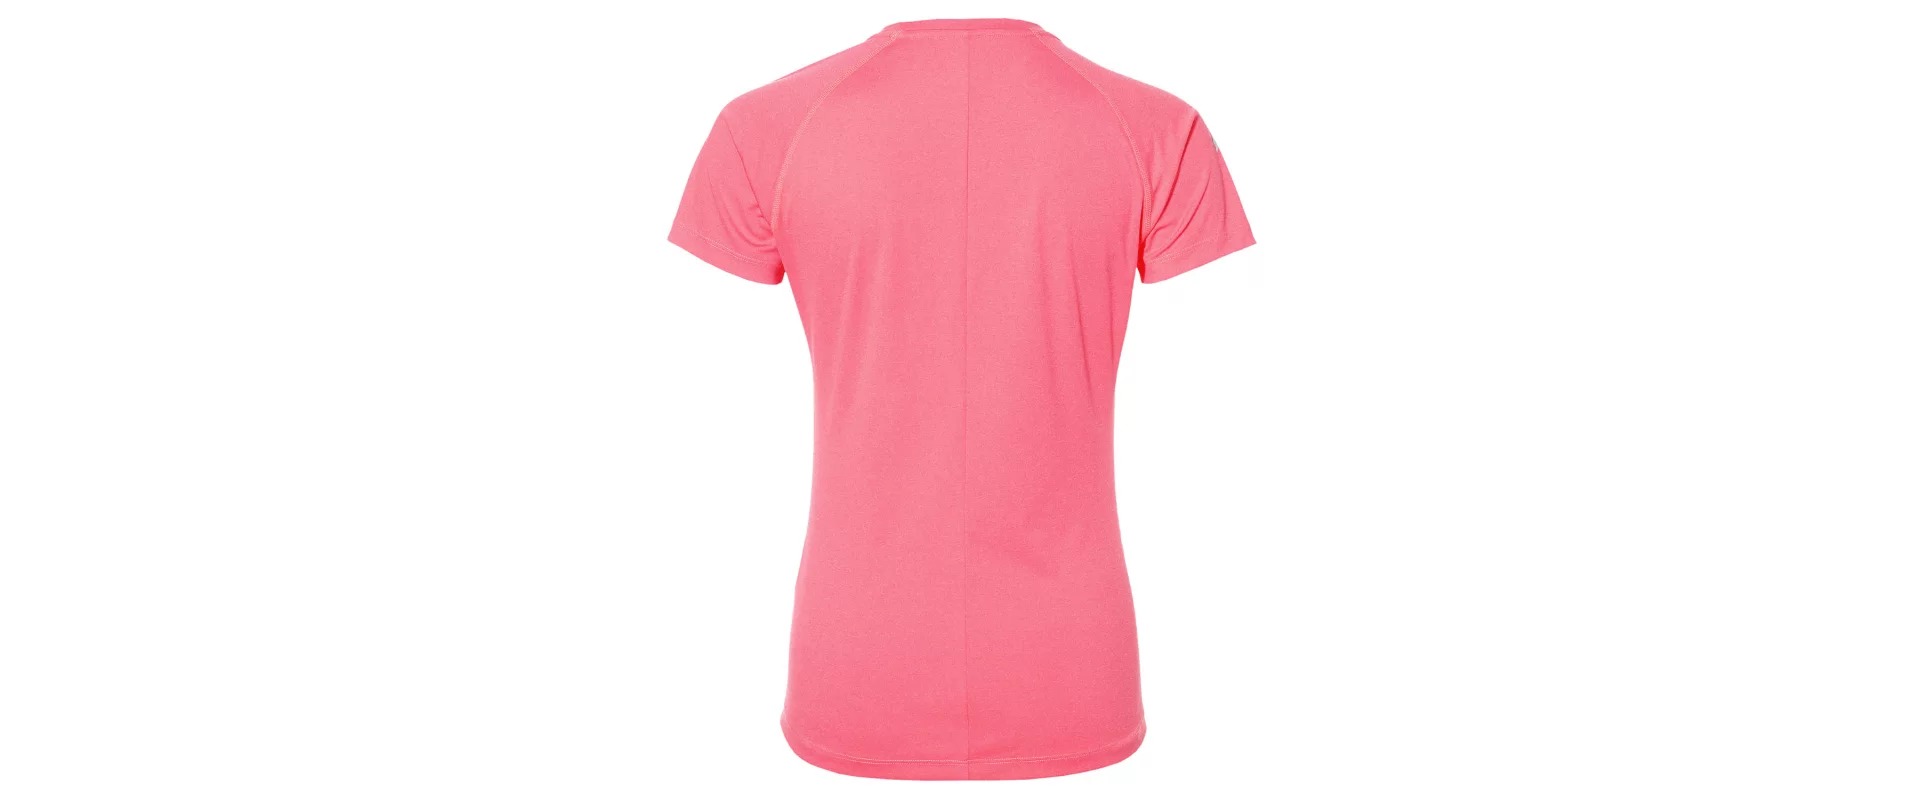 Asics Stripe Ss Top W / Женская футболка фото 1